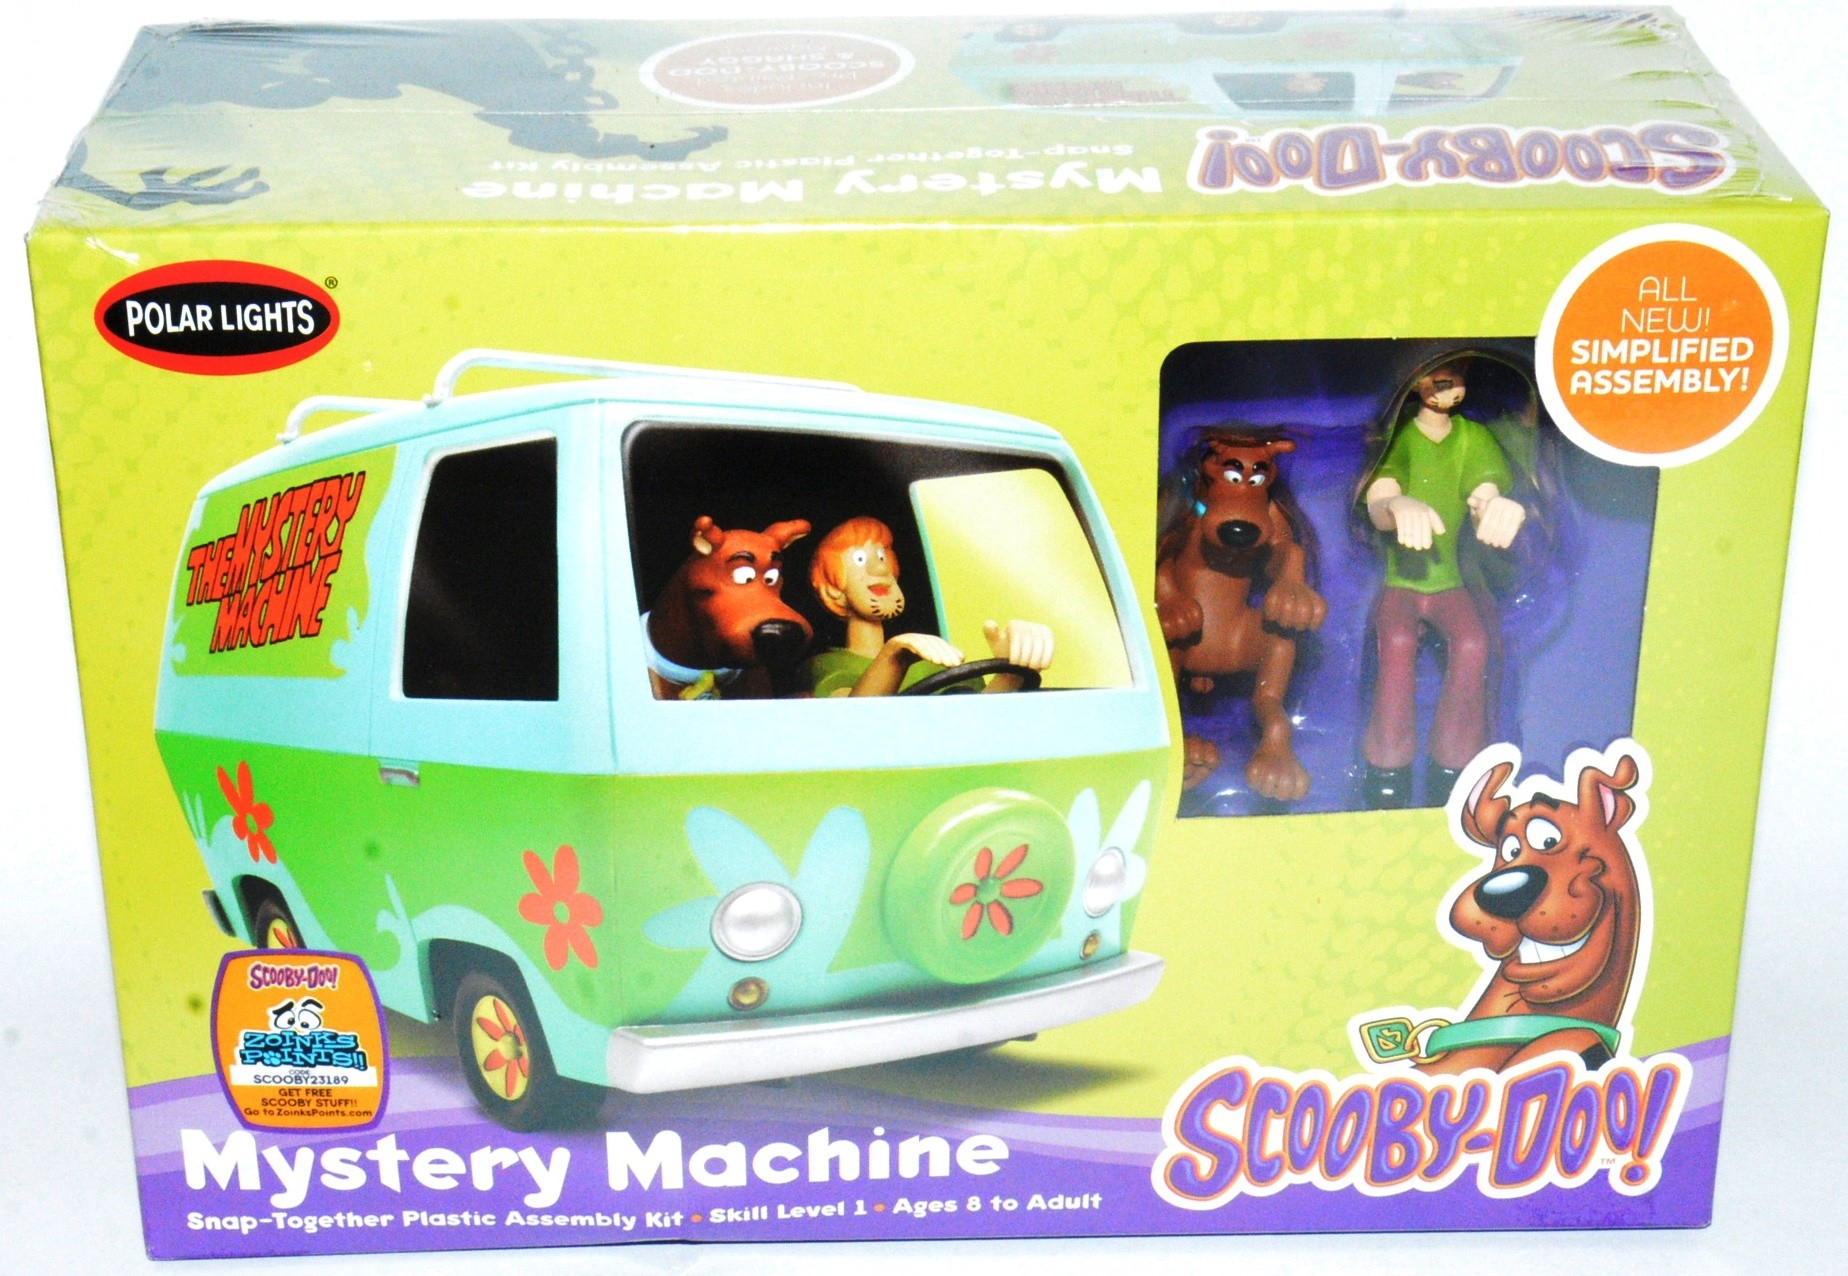 Polar Lights Scooby-Doo Mystery Machine Kit - Universal Classic Toys